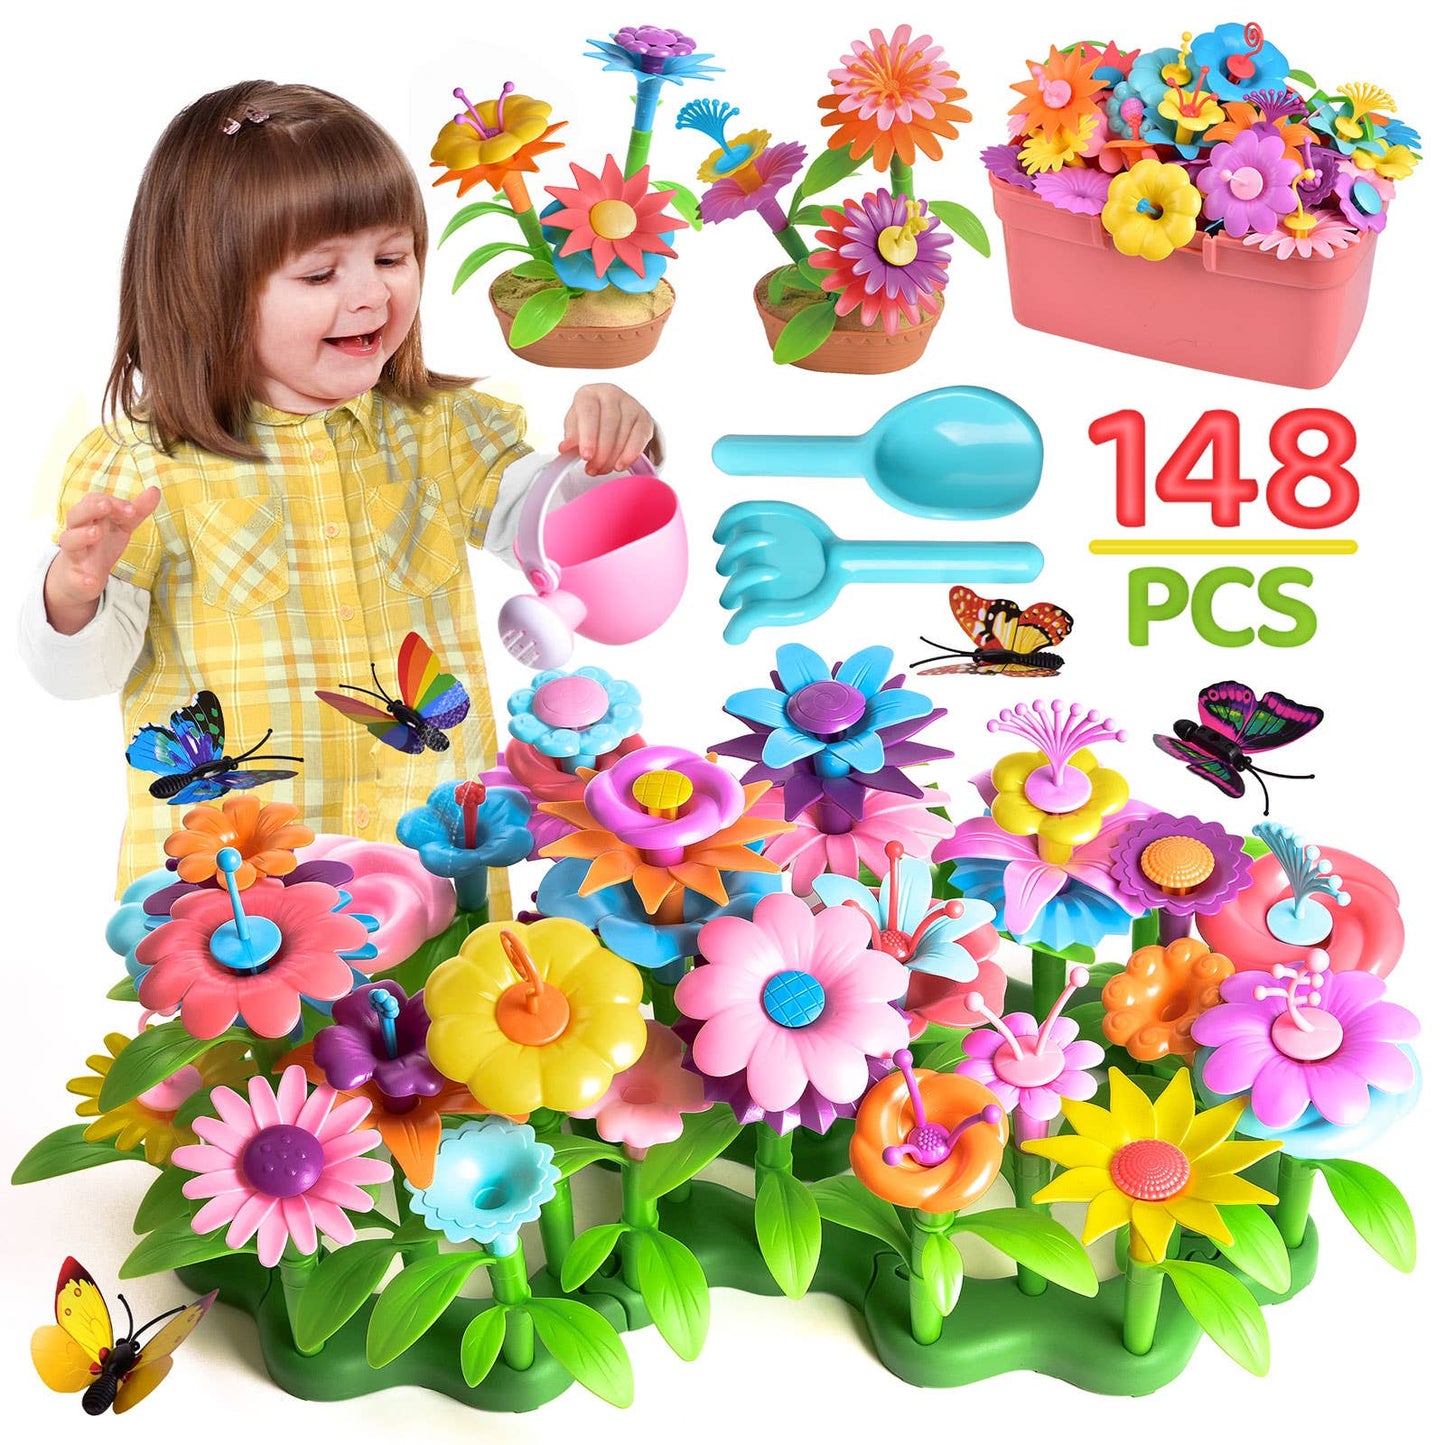 148PCS Garden Building Toys, Pretend Play, Preschool STEM